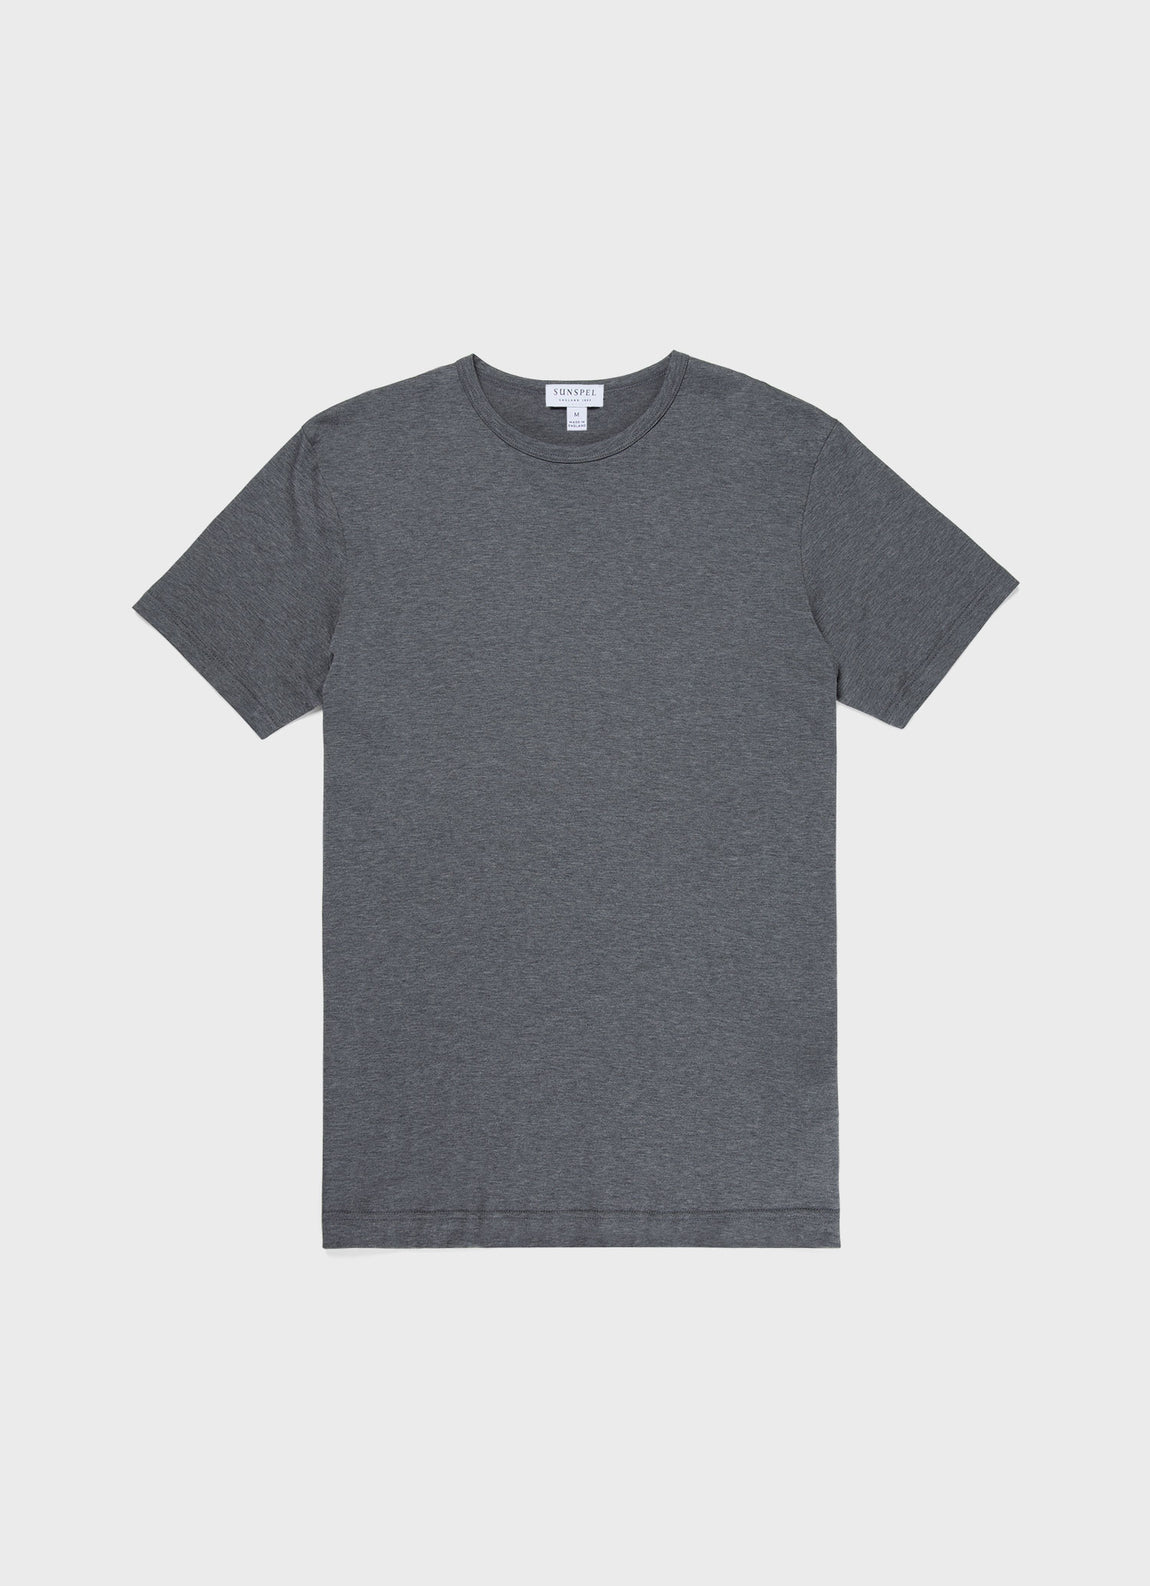 Men's Classic T-shirt in Charcoal Melange